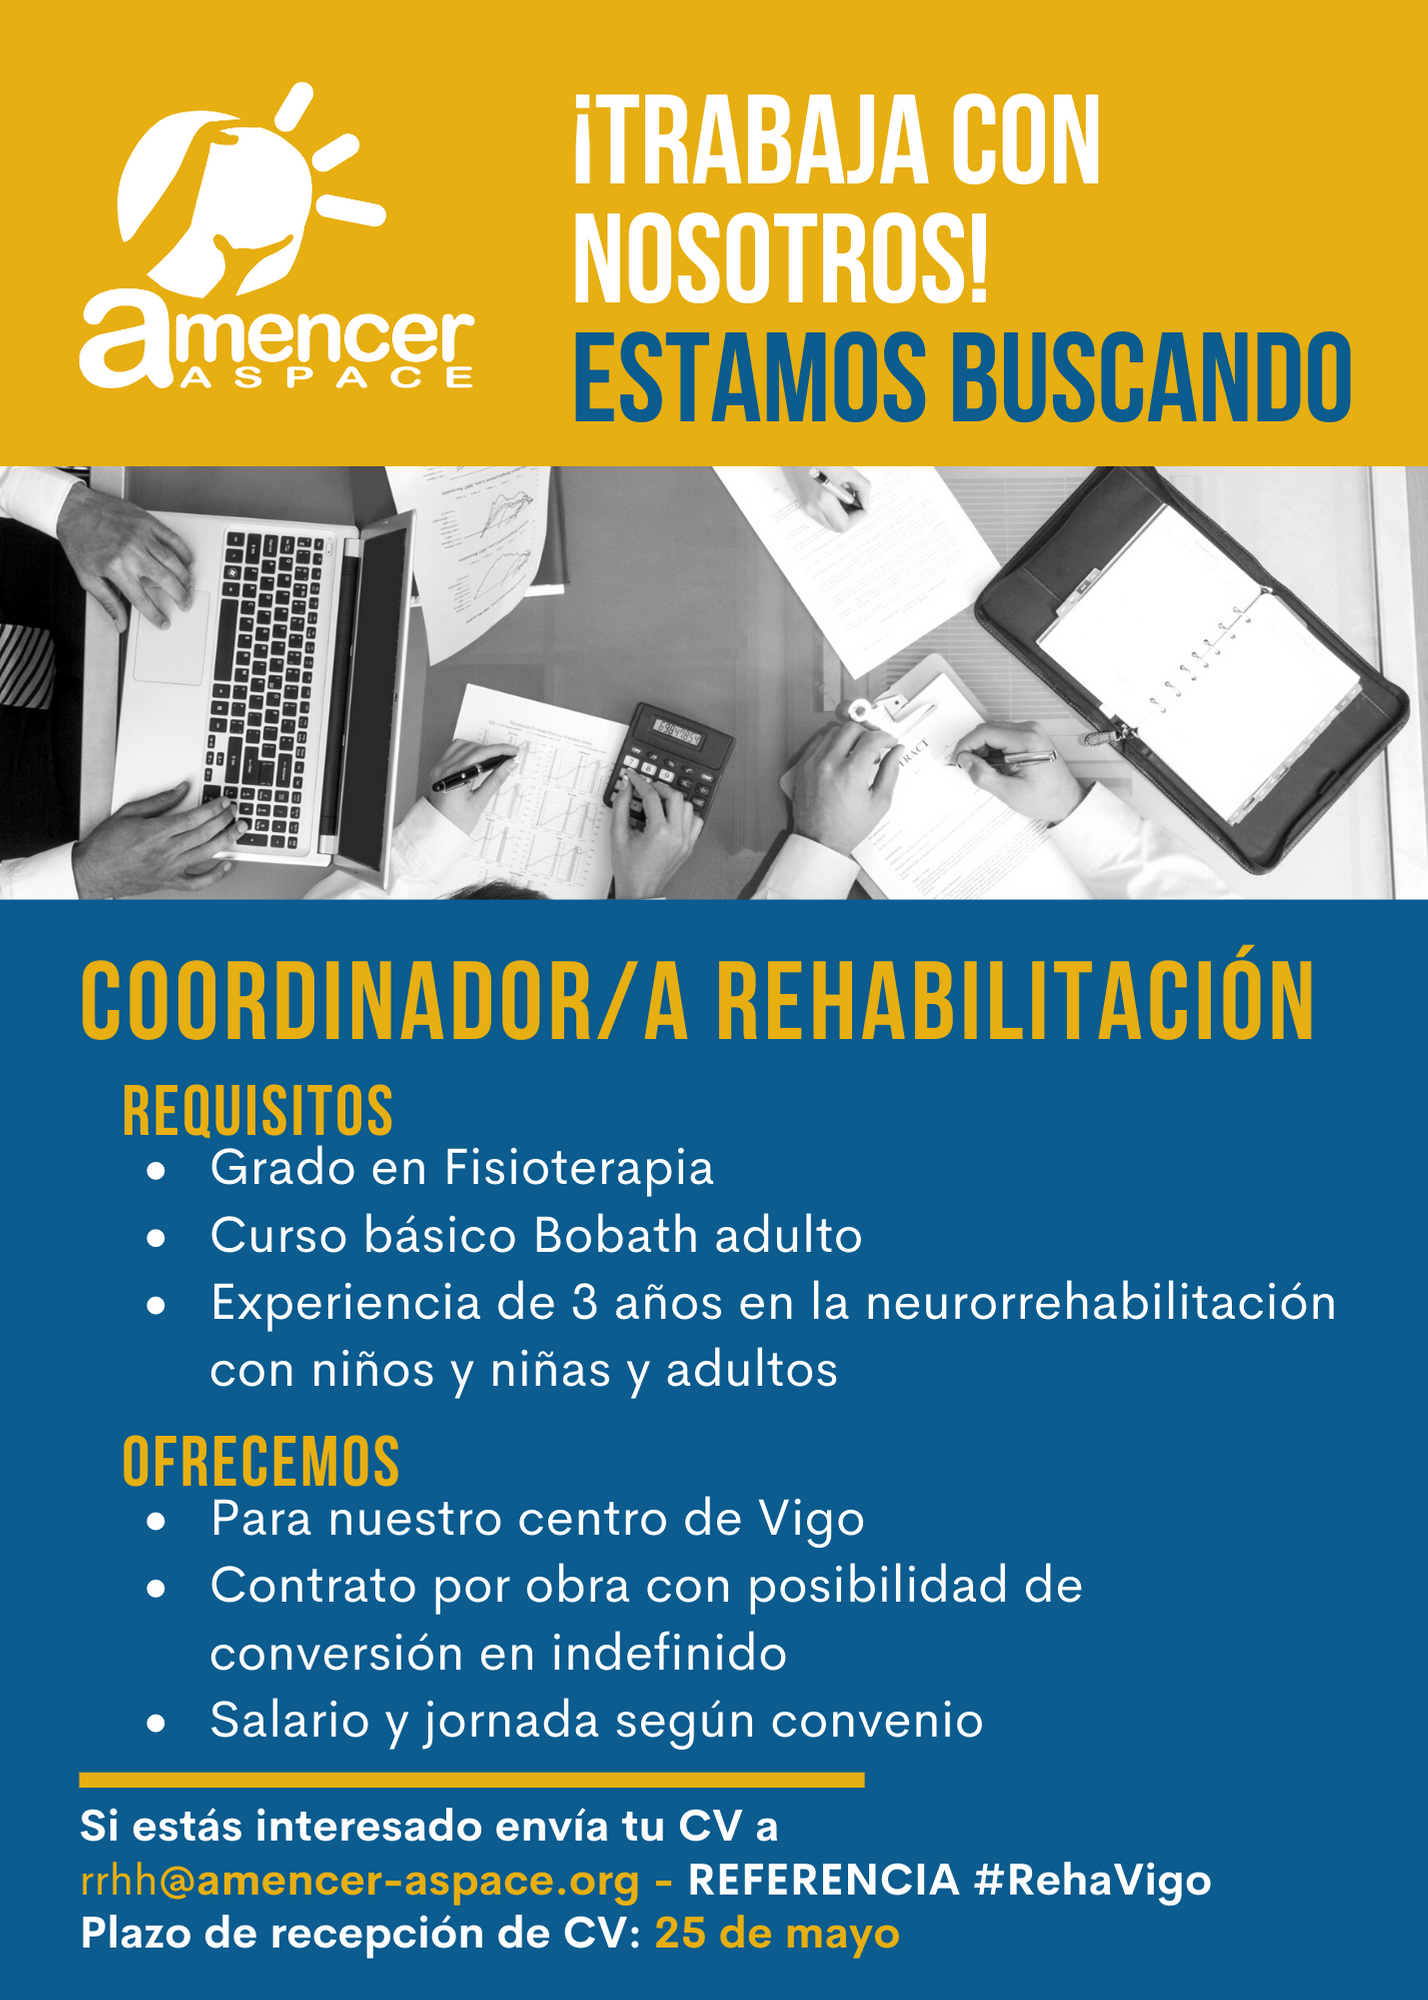 Oferta de empleo de Coordinador de servicio de rehabilitación externa de AMENCER - ASPACE en Vigo